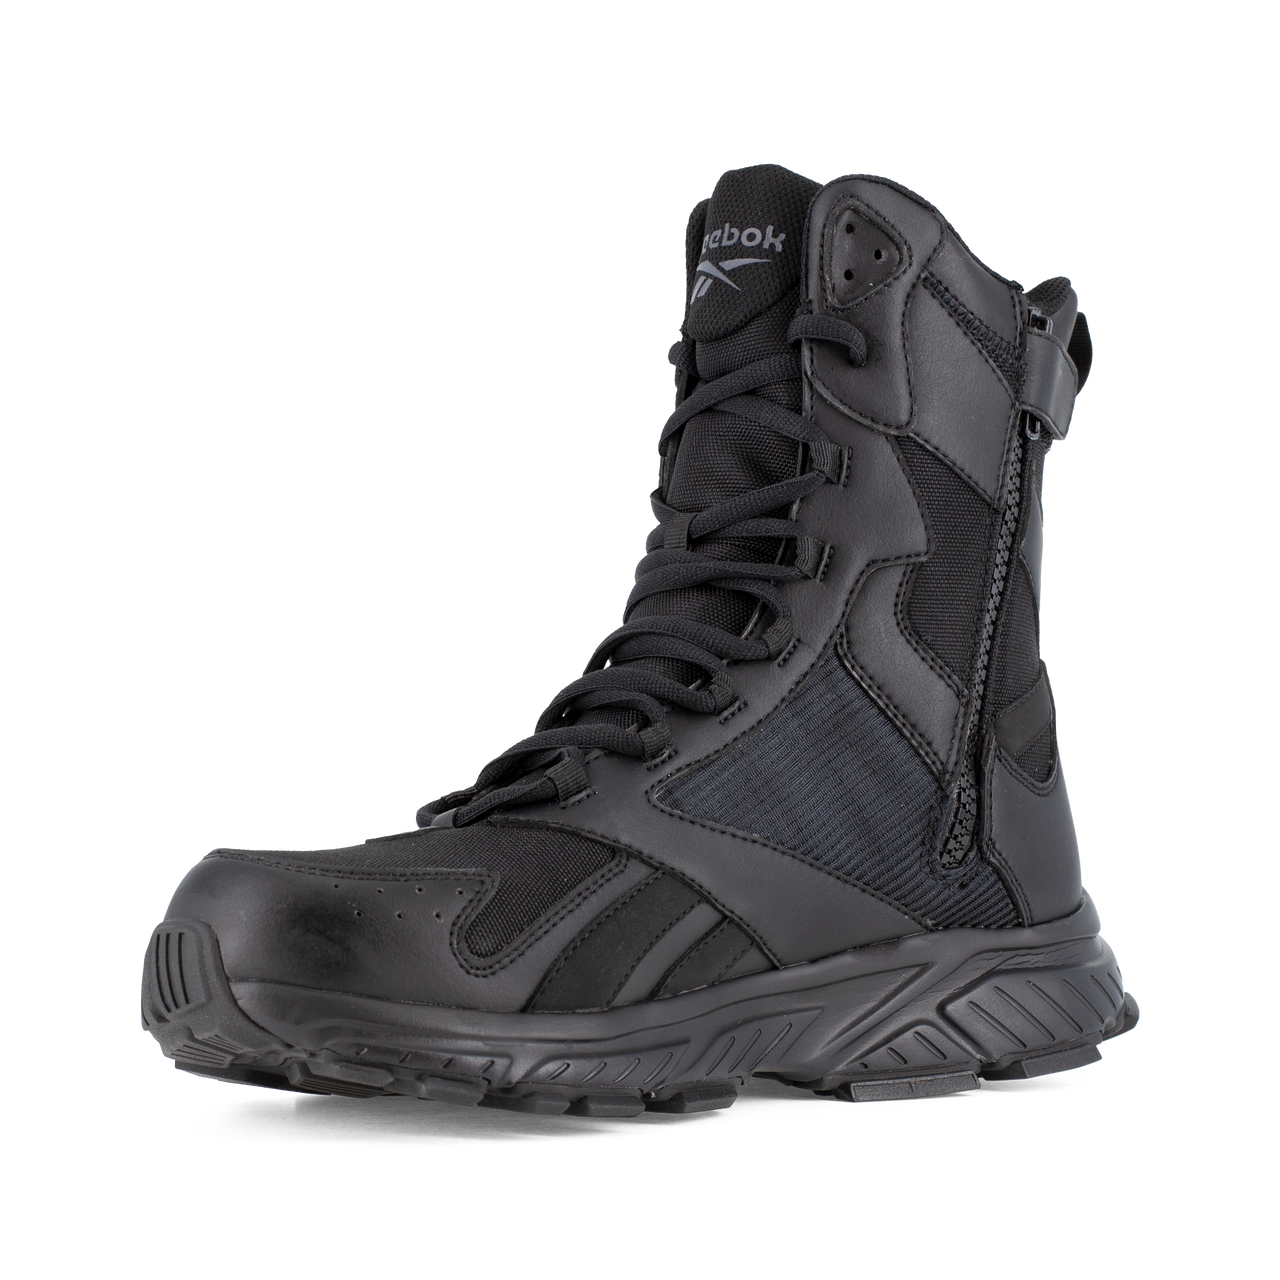 Reebok Tactical Hyperium Tactical 8" Men's Boot with Soft Toe - Black Tactical Gear Australia Supplier Distributor Dealer